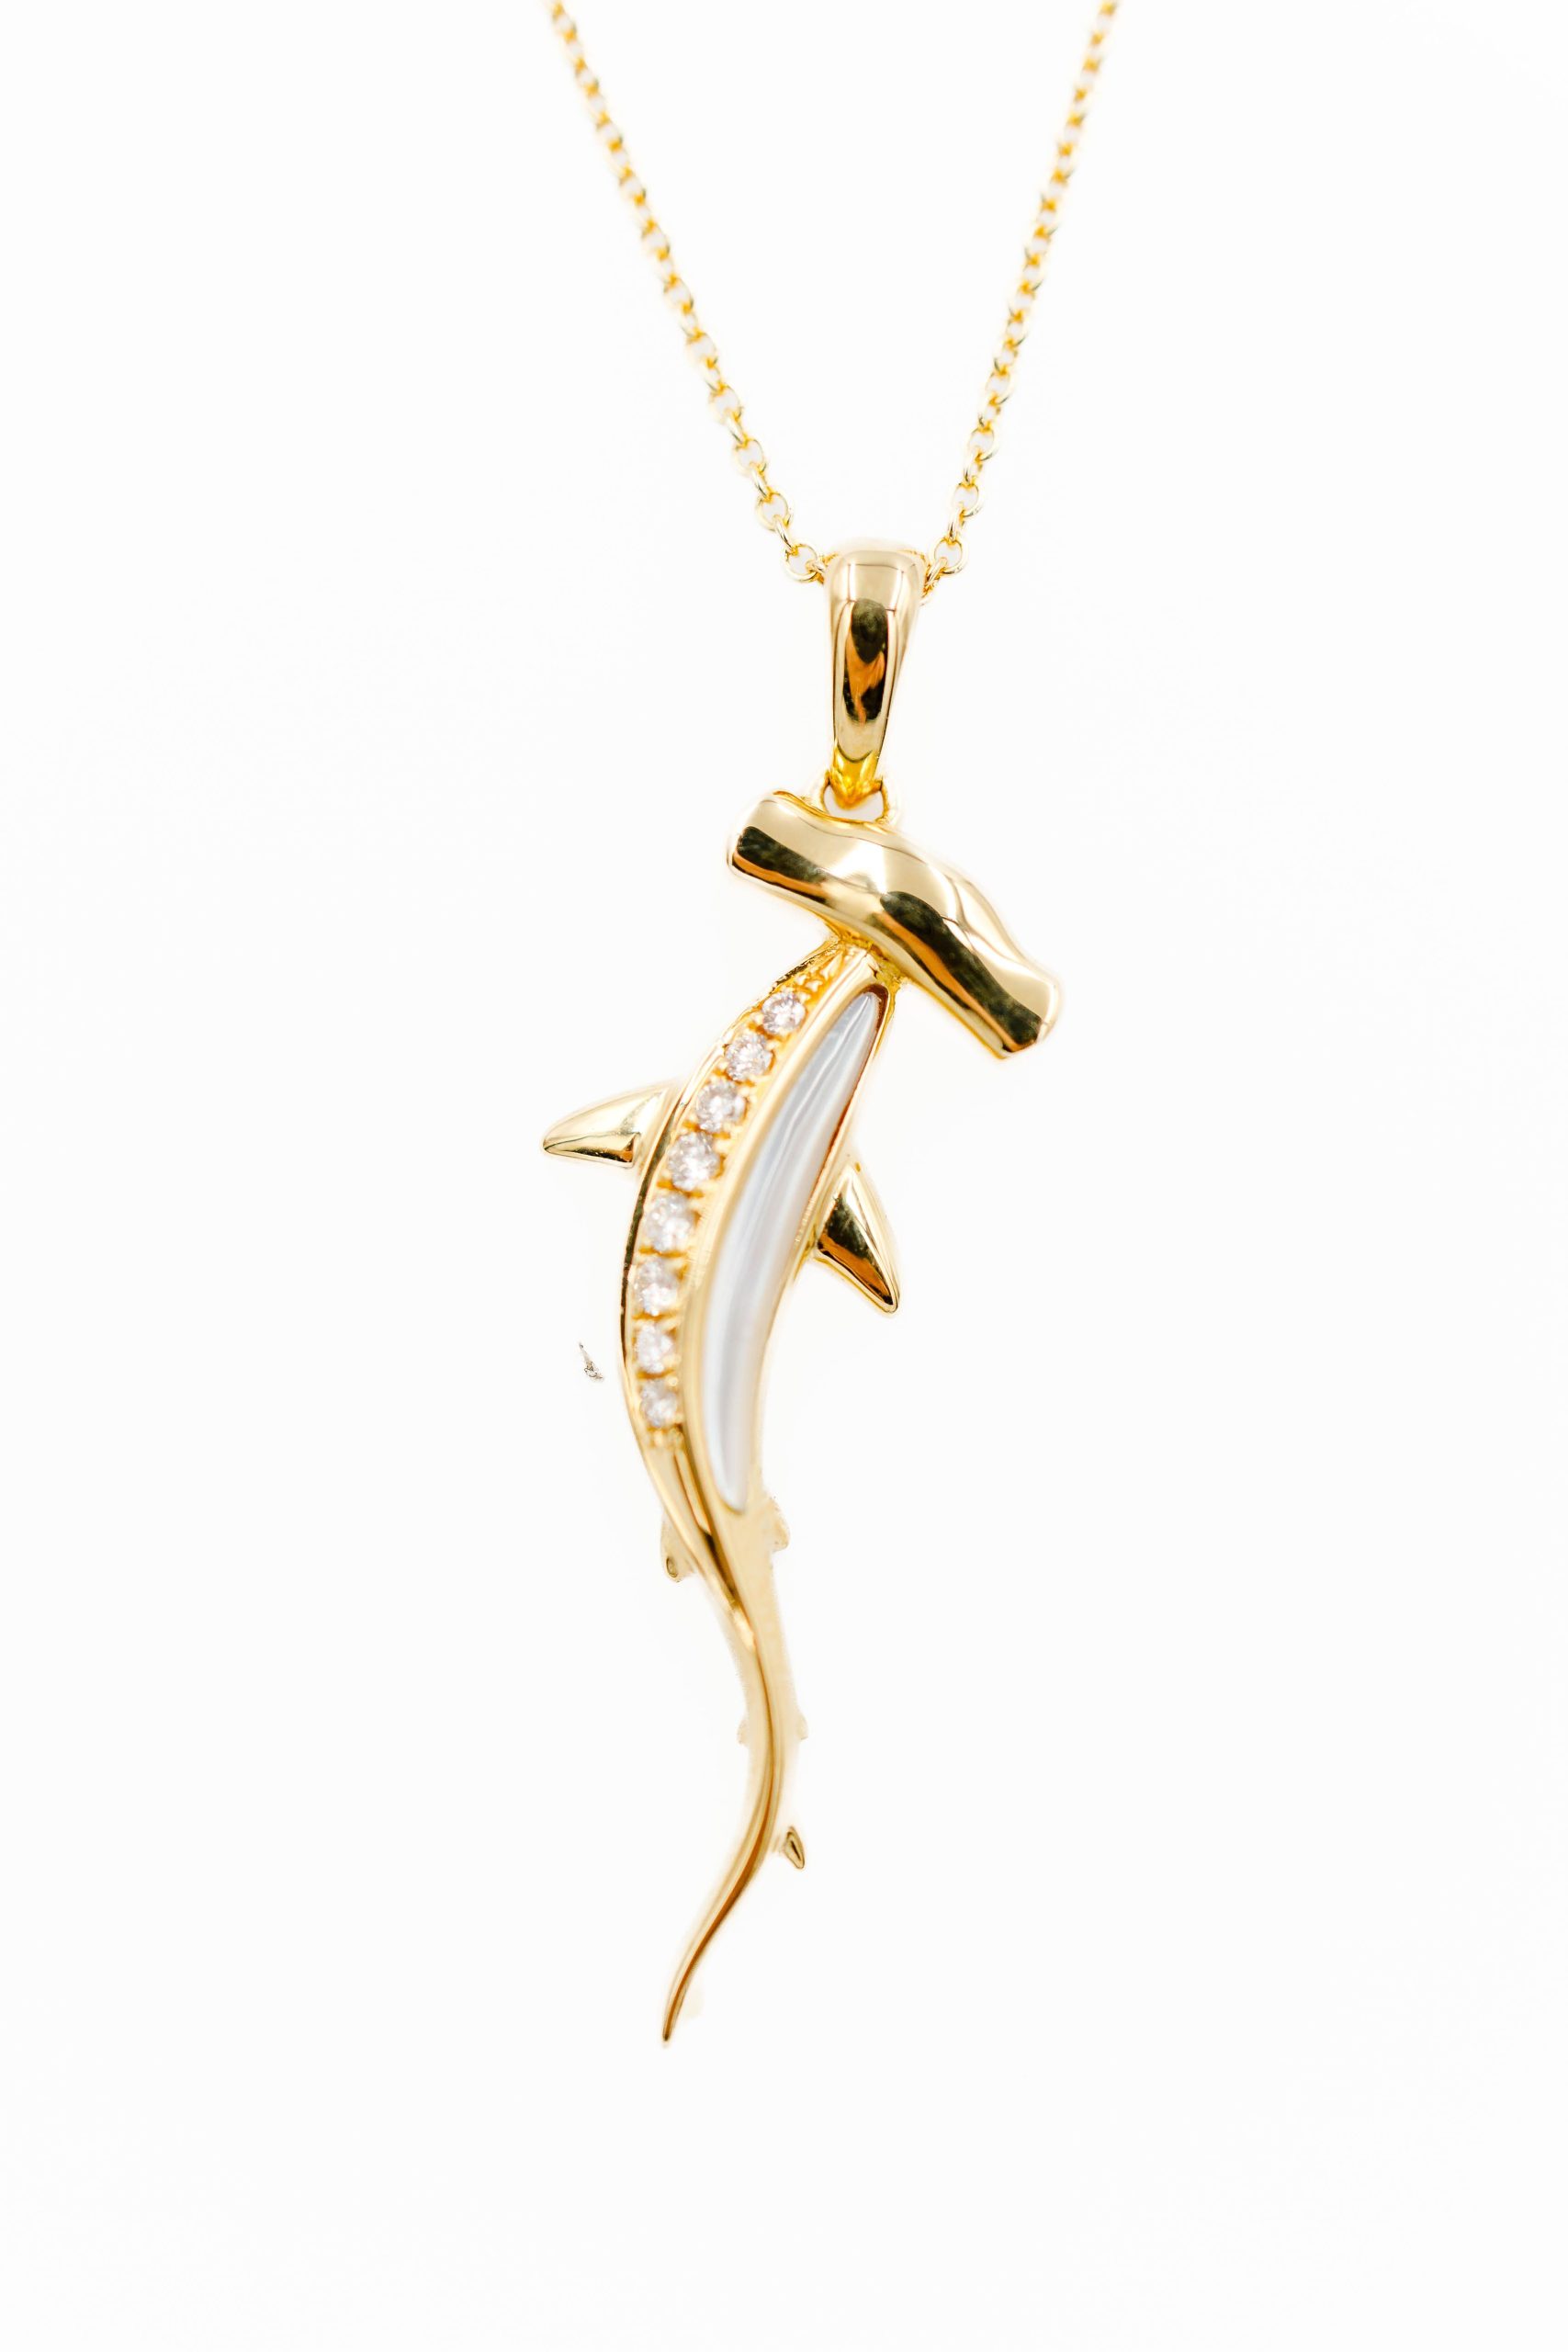 Hammerhead shark necklace - Designs by Aaron